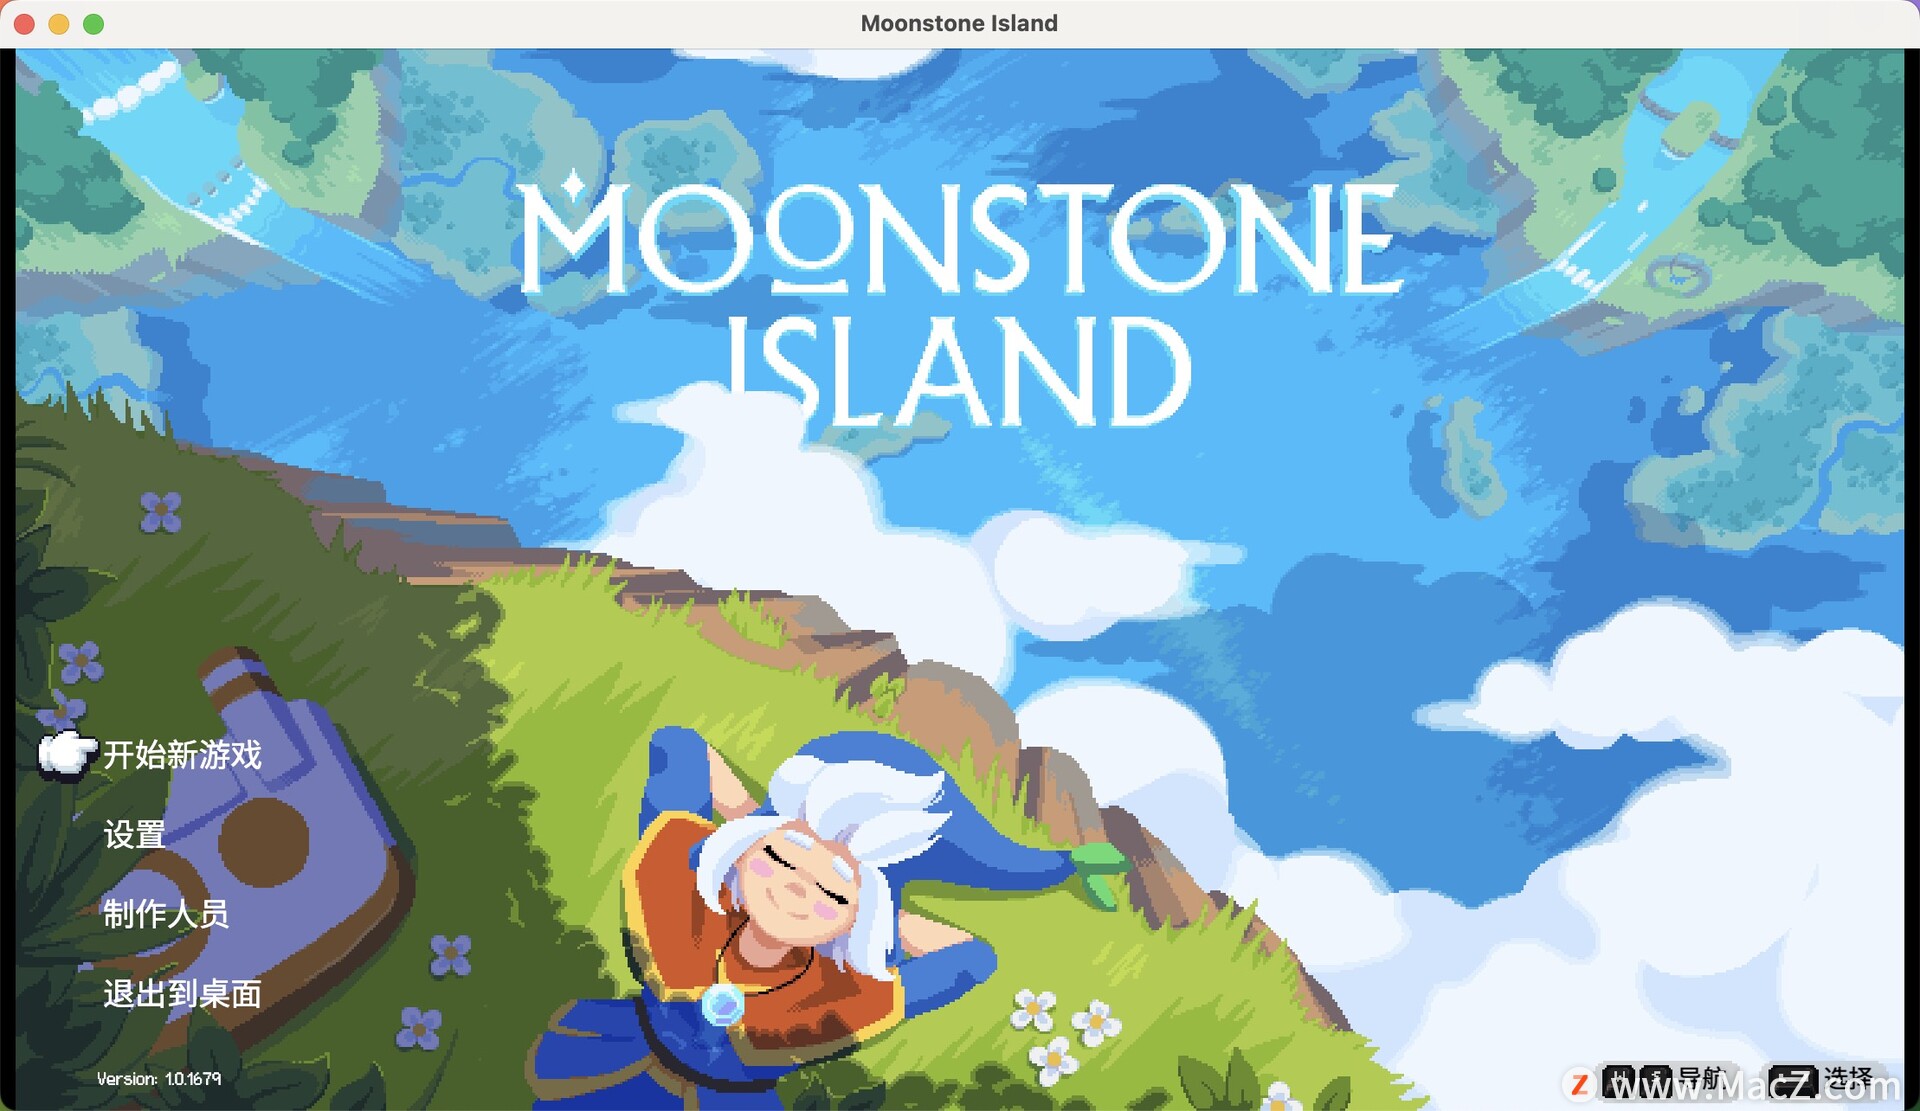 月光石岛 Moonstone Island for mac(像素风模拟游戏)